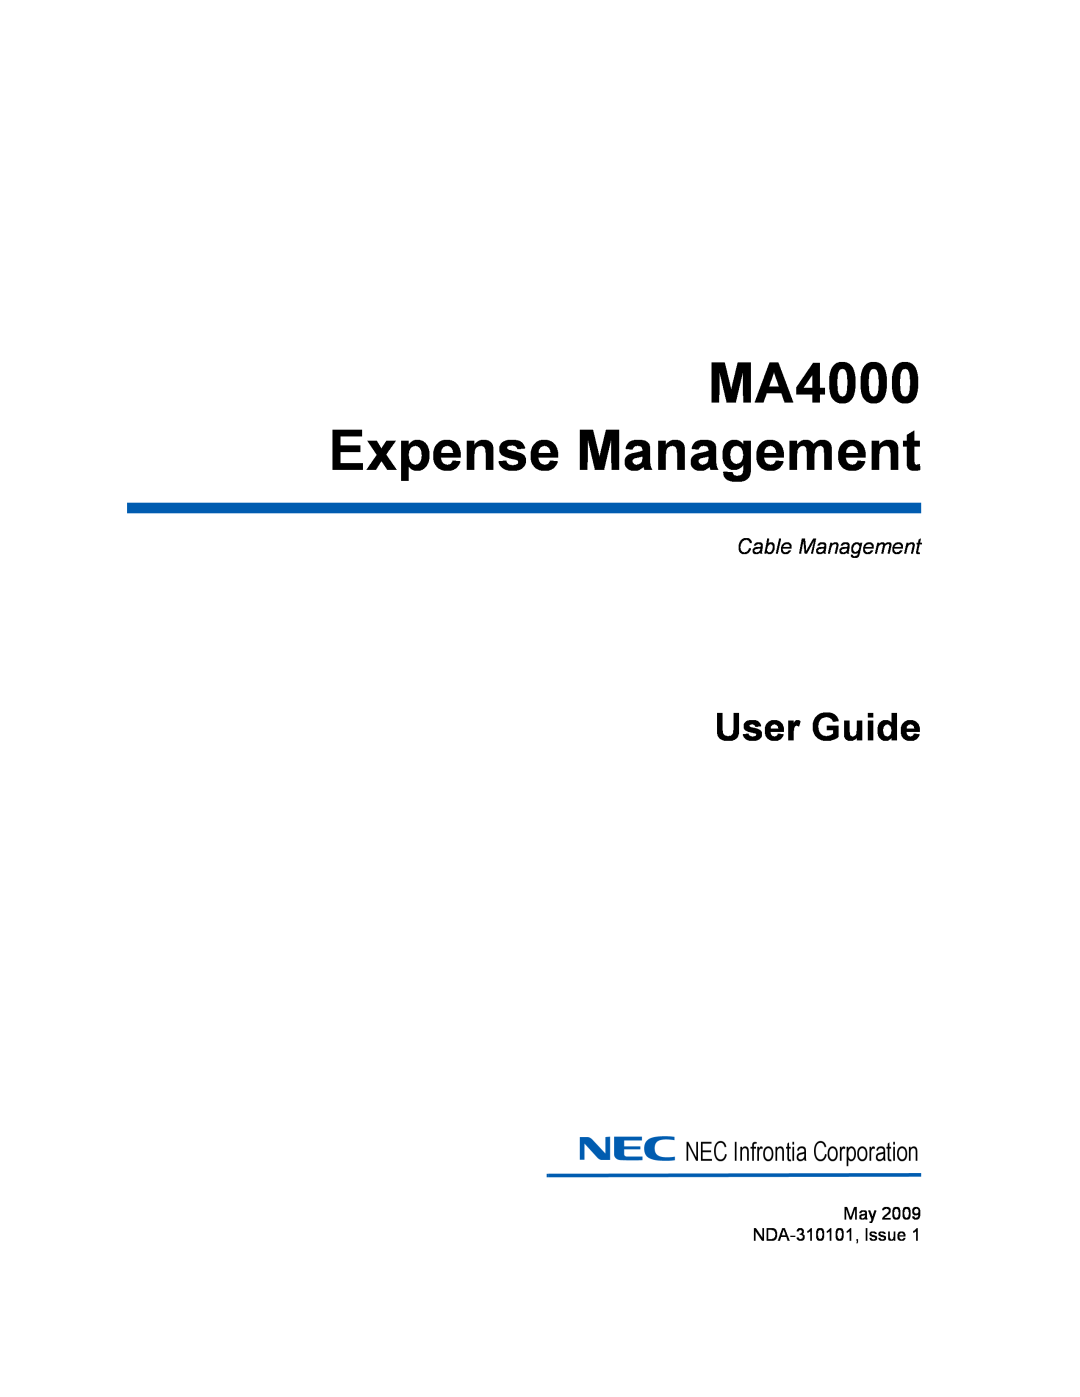 NEC manual NEC NEC Infrontia Corporation, MA4000 Expense Management, User Guide, Cable Management 